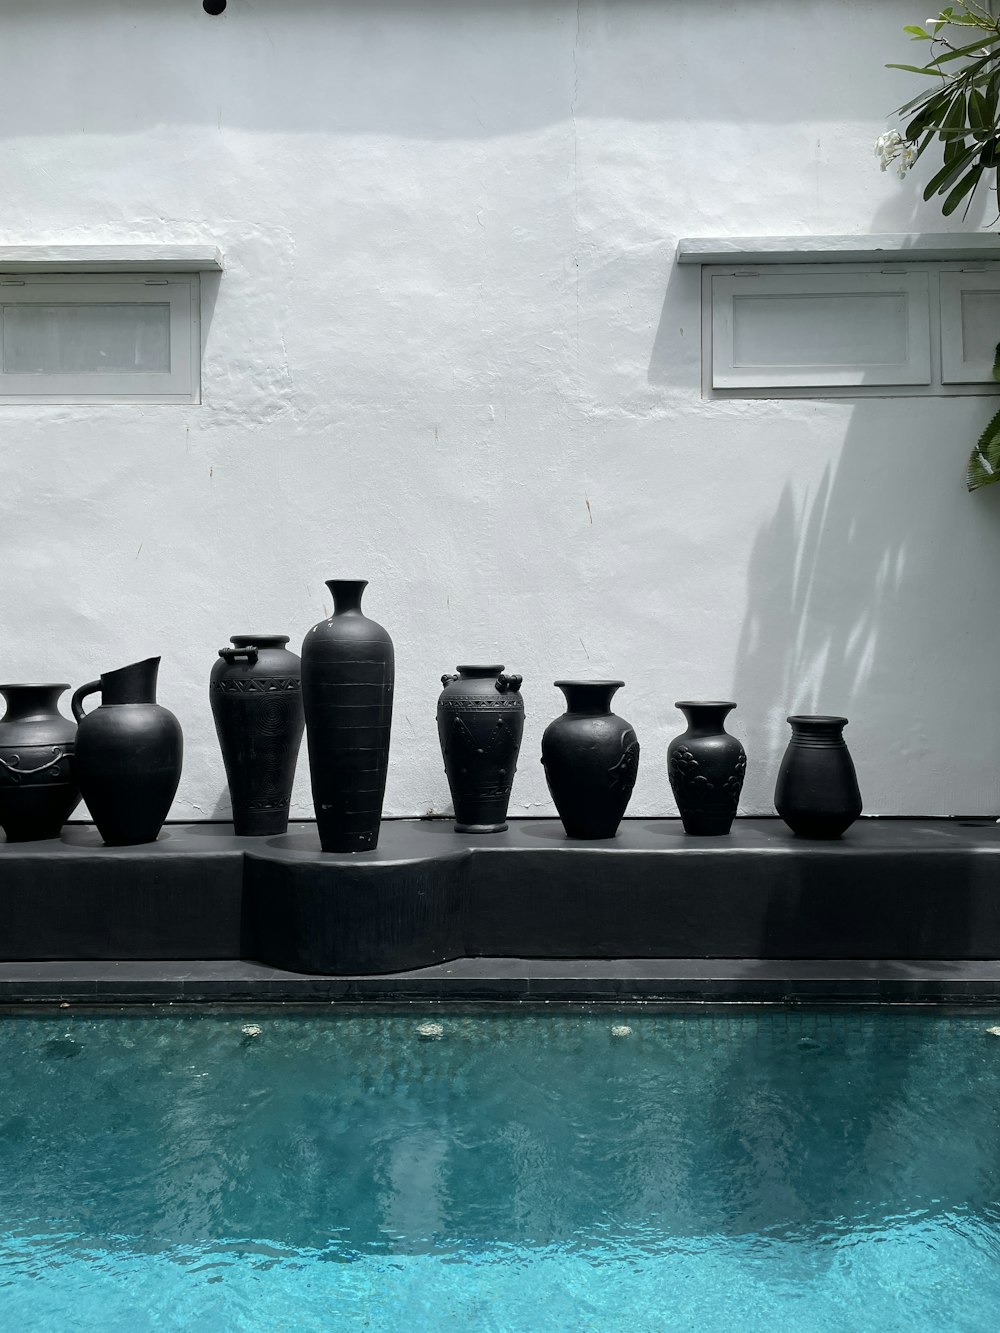 vasi di terracotta nera su vaso di ceramica nera